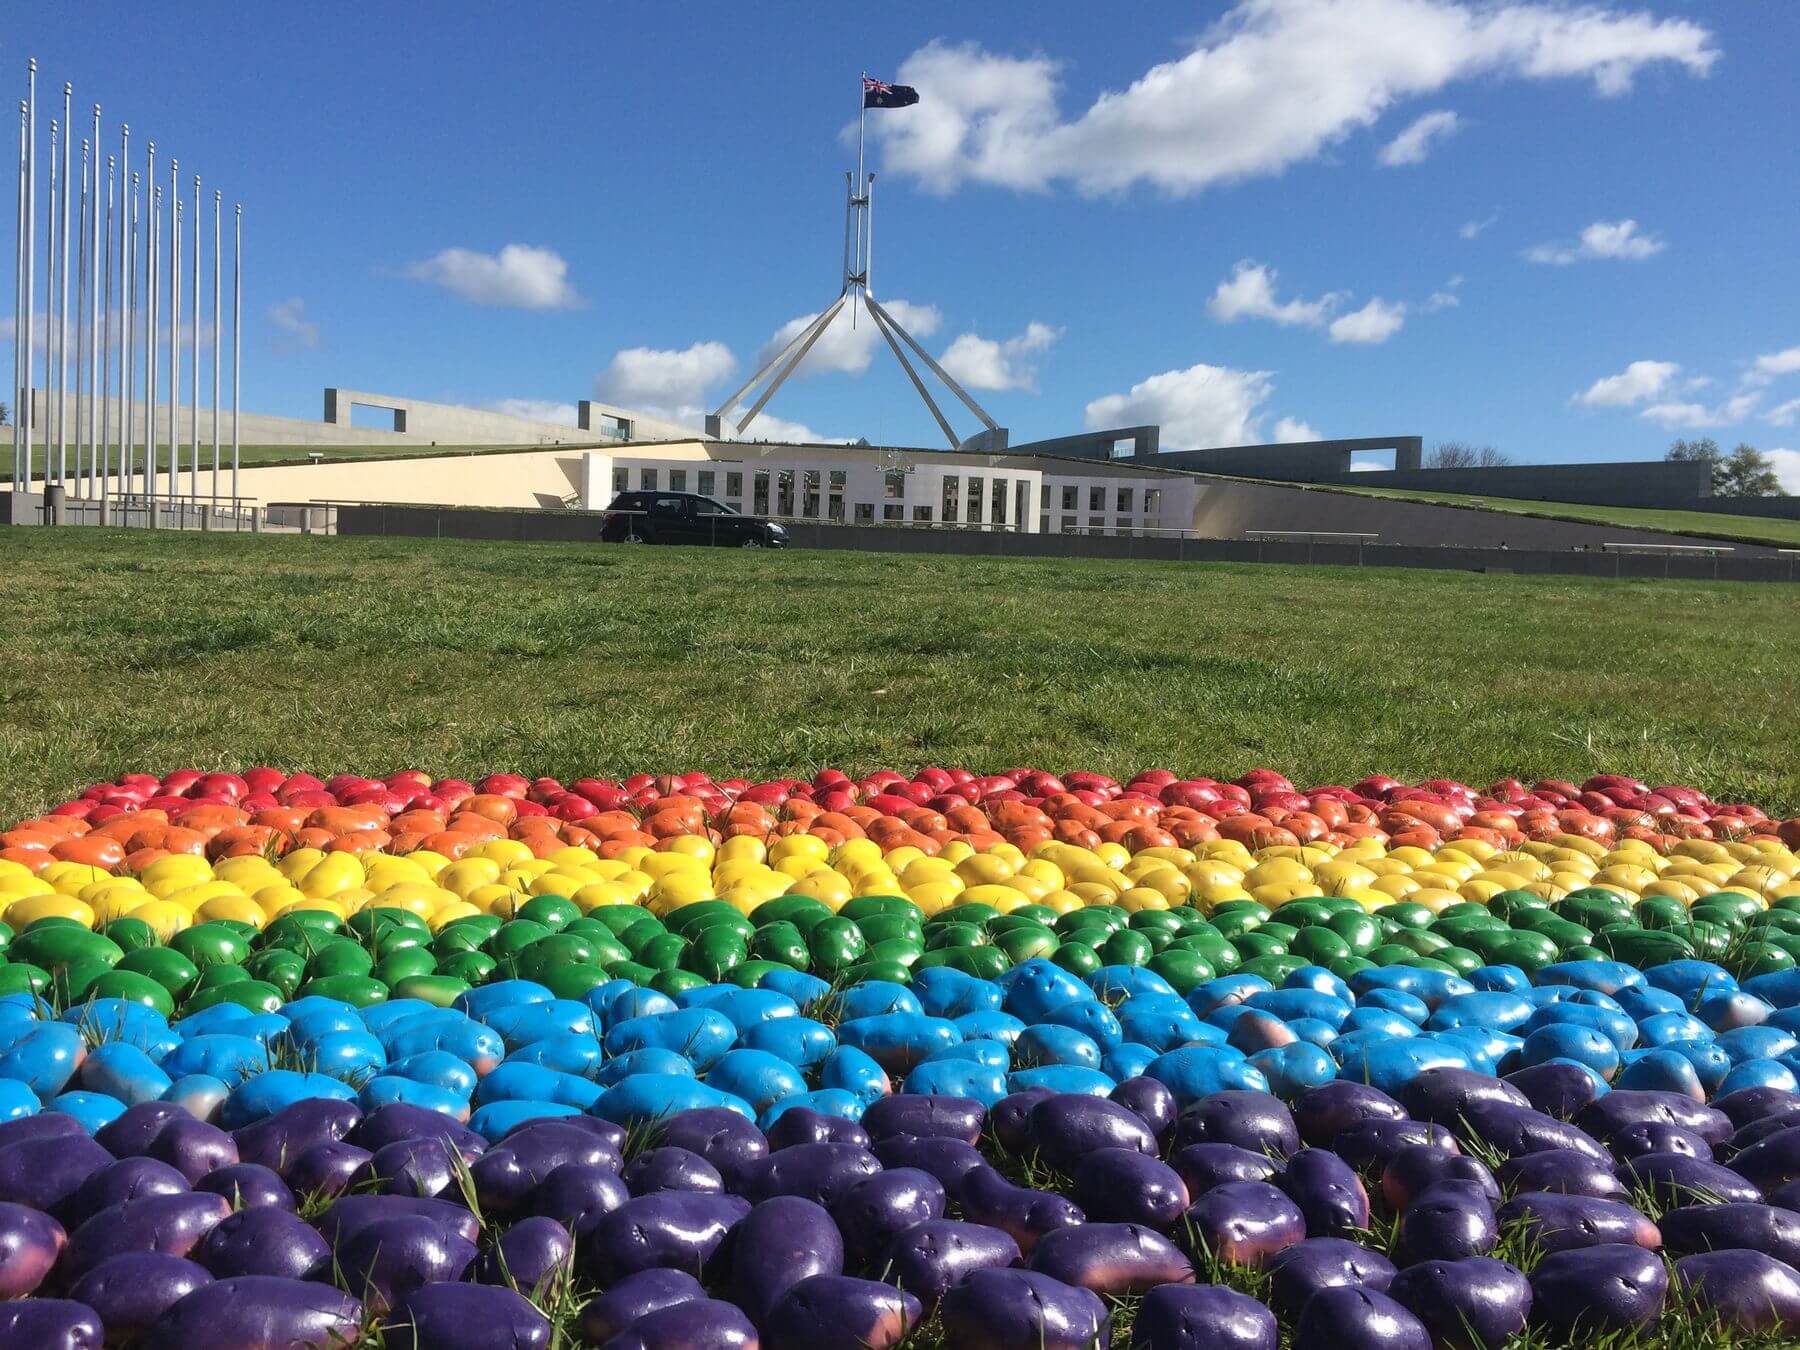 In Australia patate rainbow per i matrimoni gay